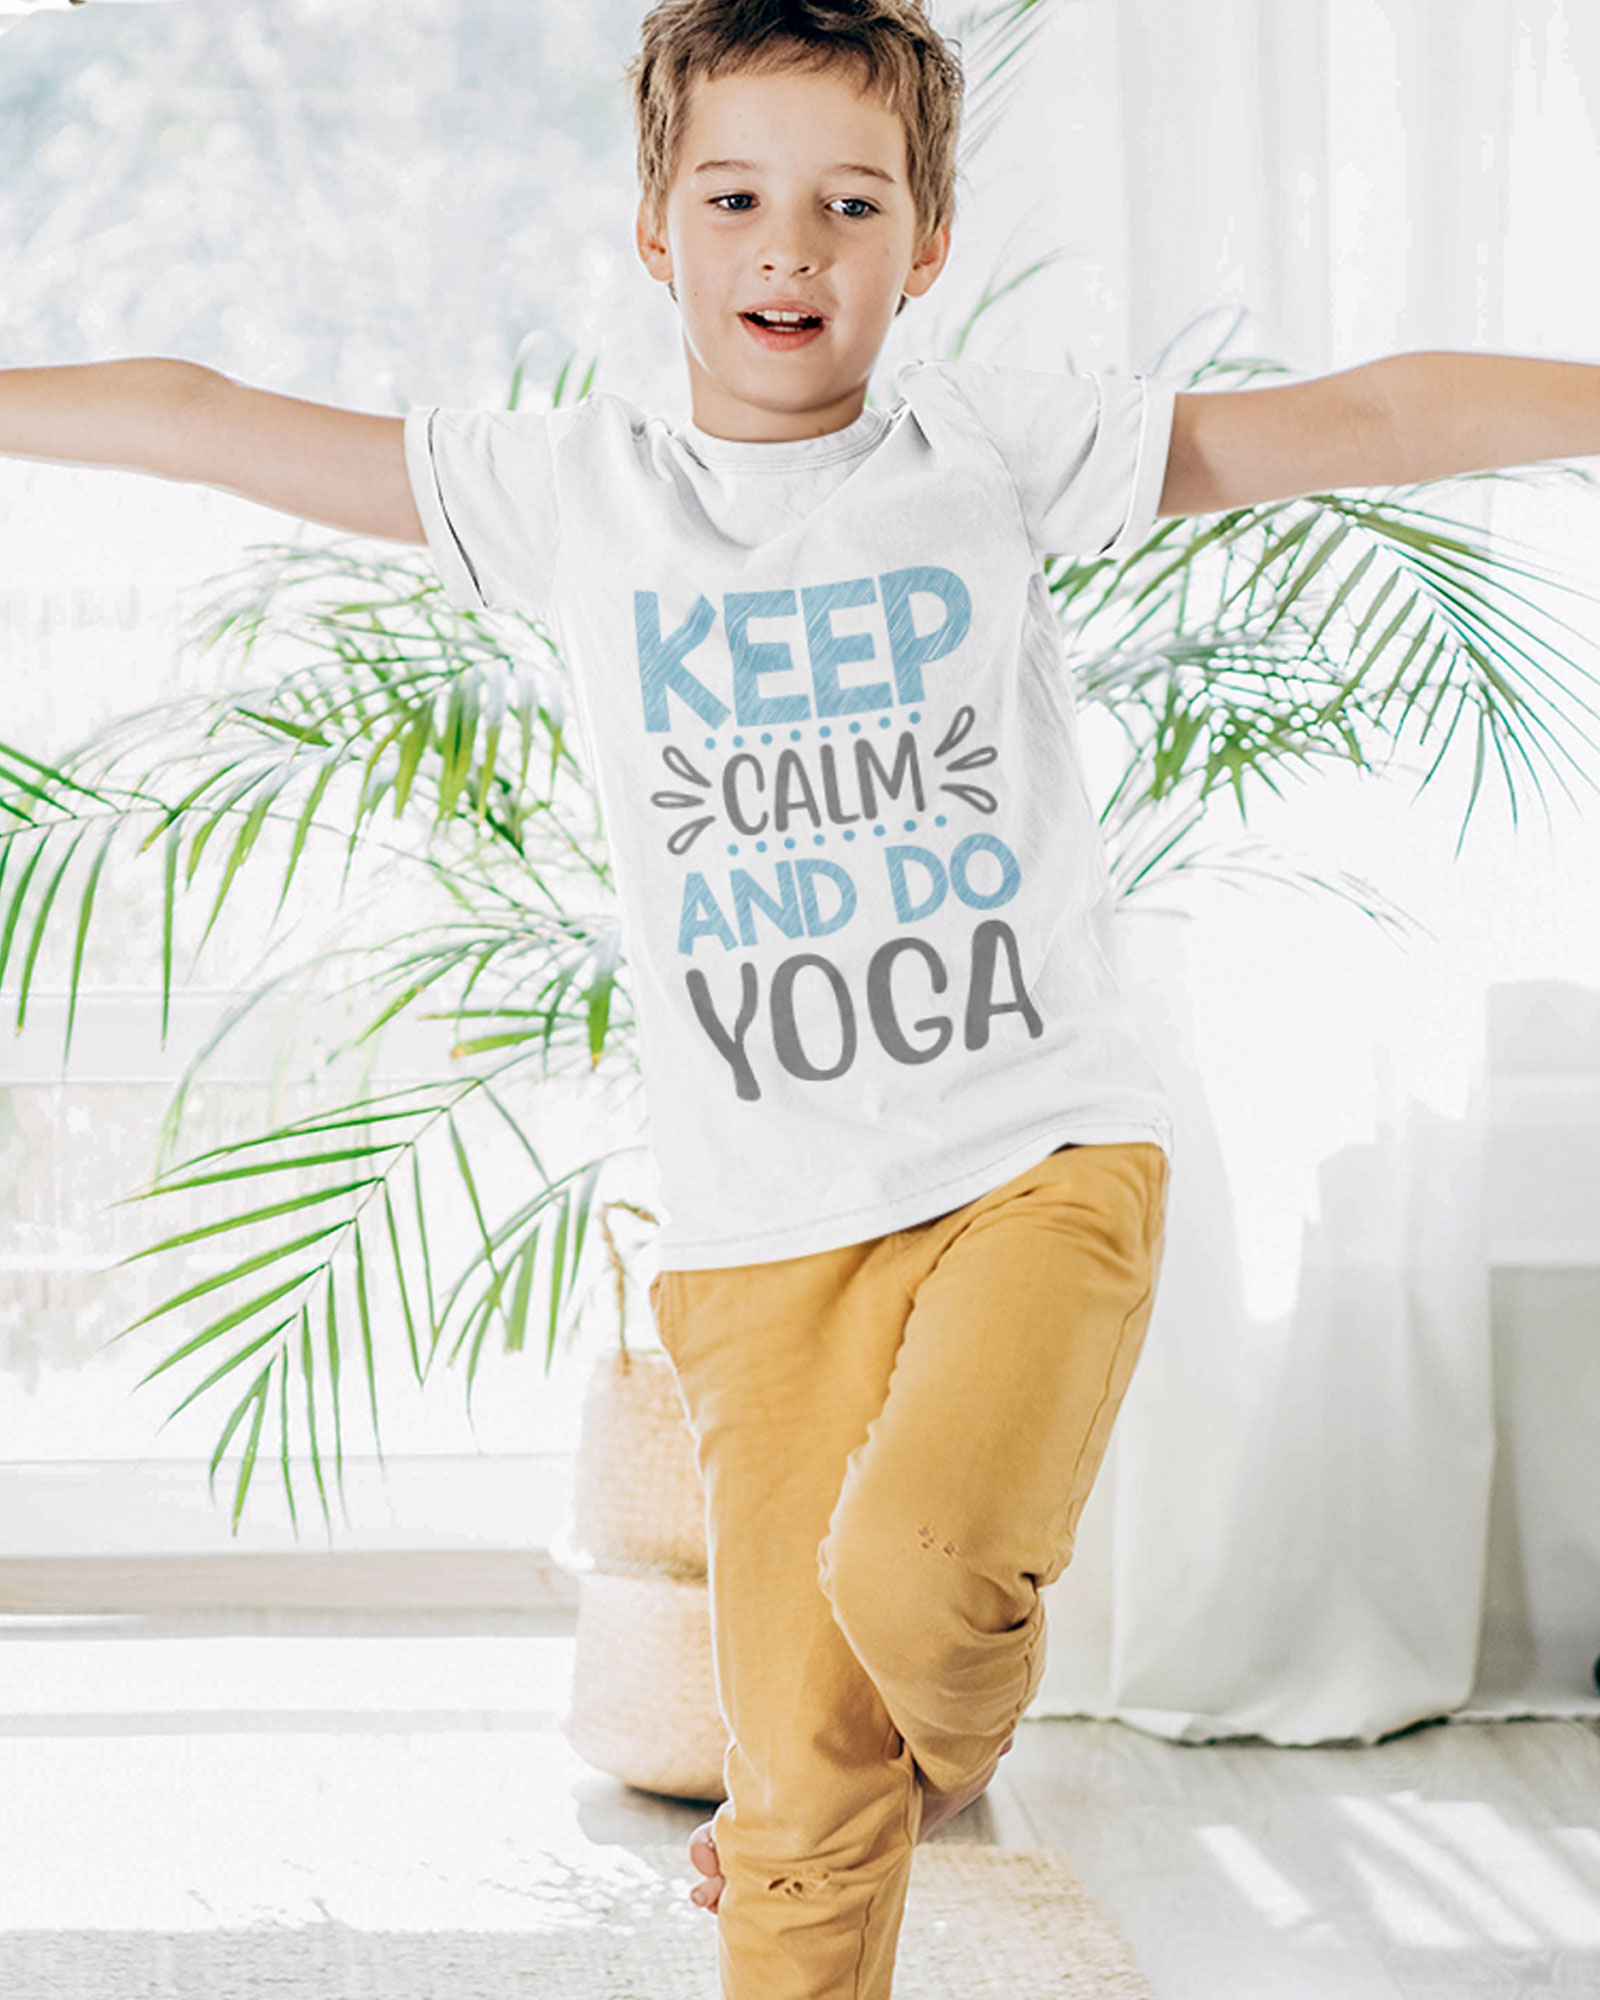 Keep calm and do yoga tshirt for boy